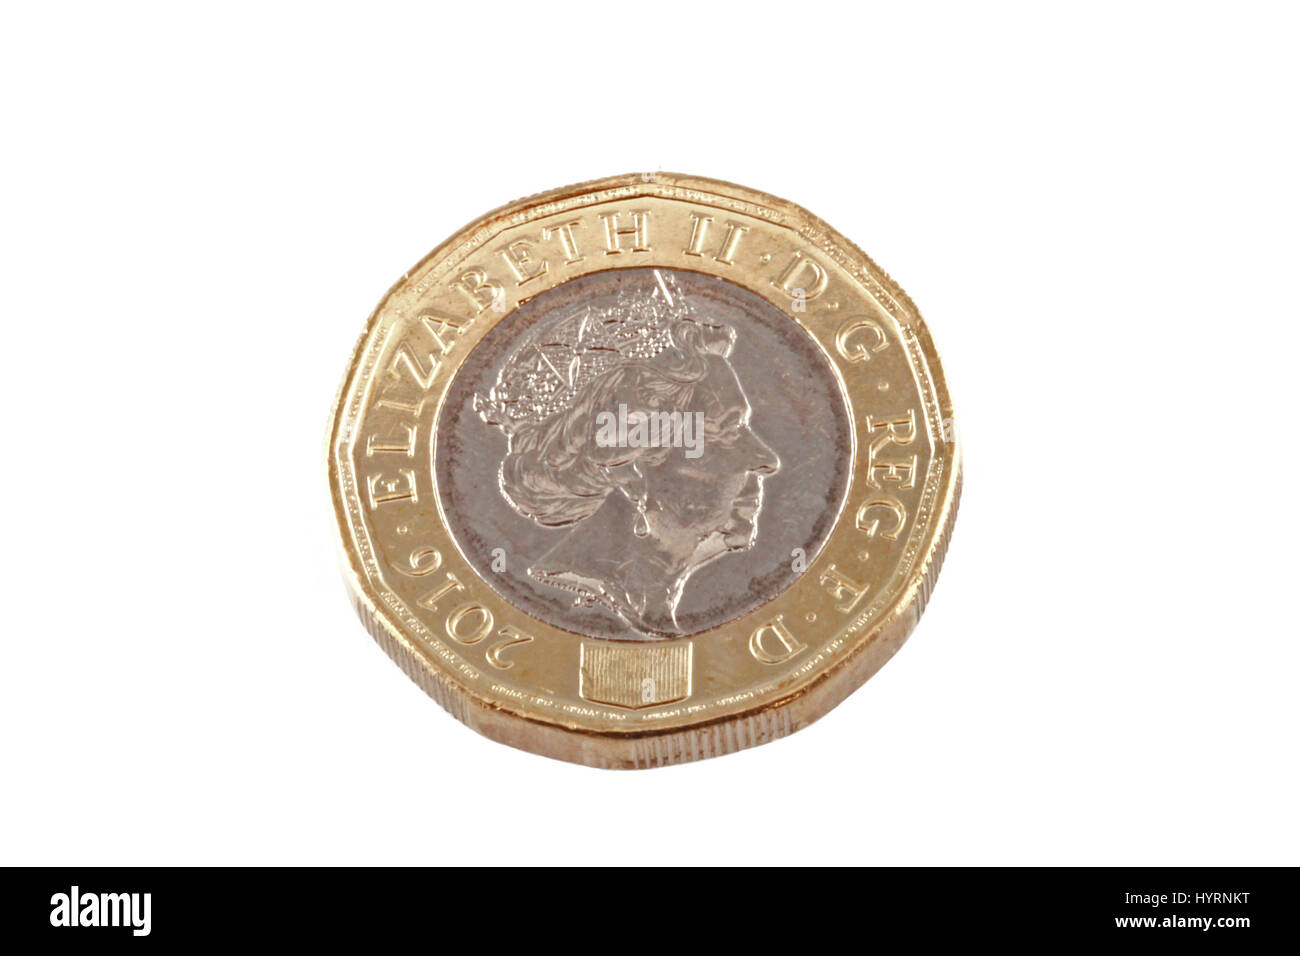 Uk new pound coin Stock Photo